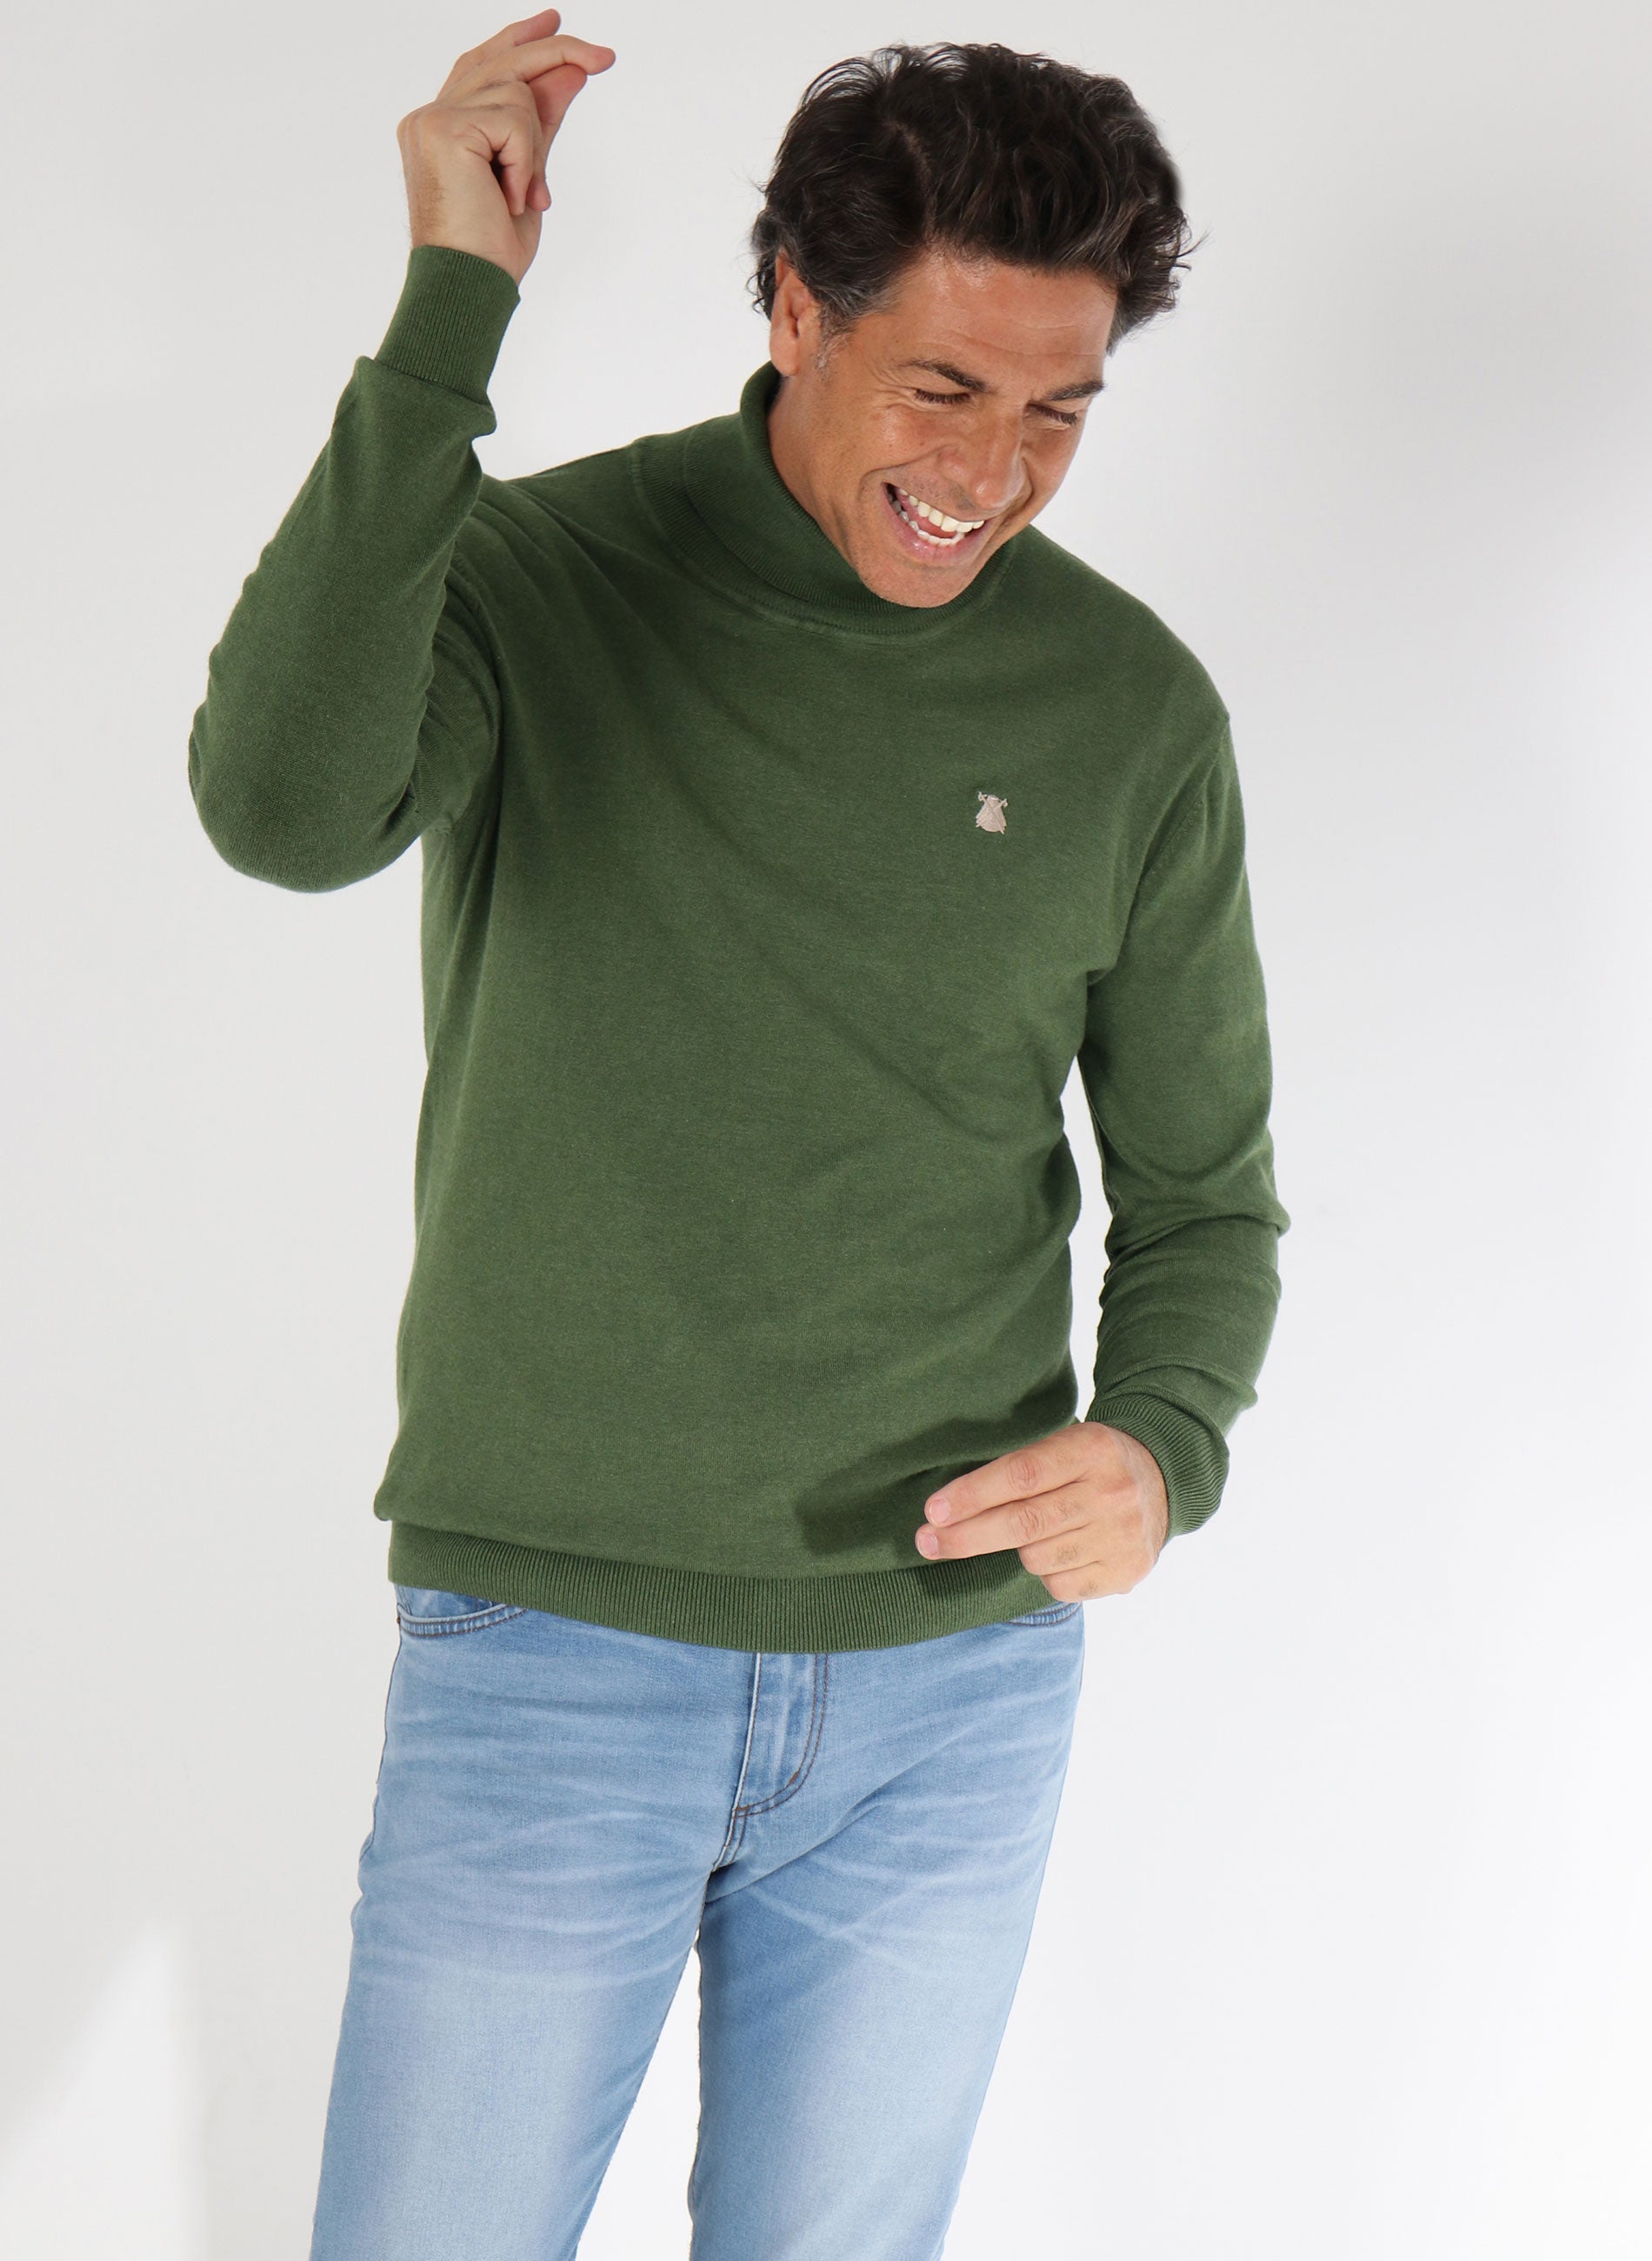 Green Turtleneck Sweater for Men – El Capote